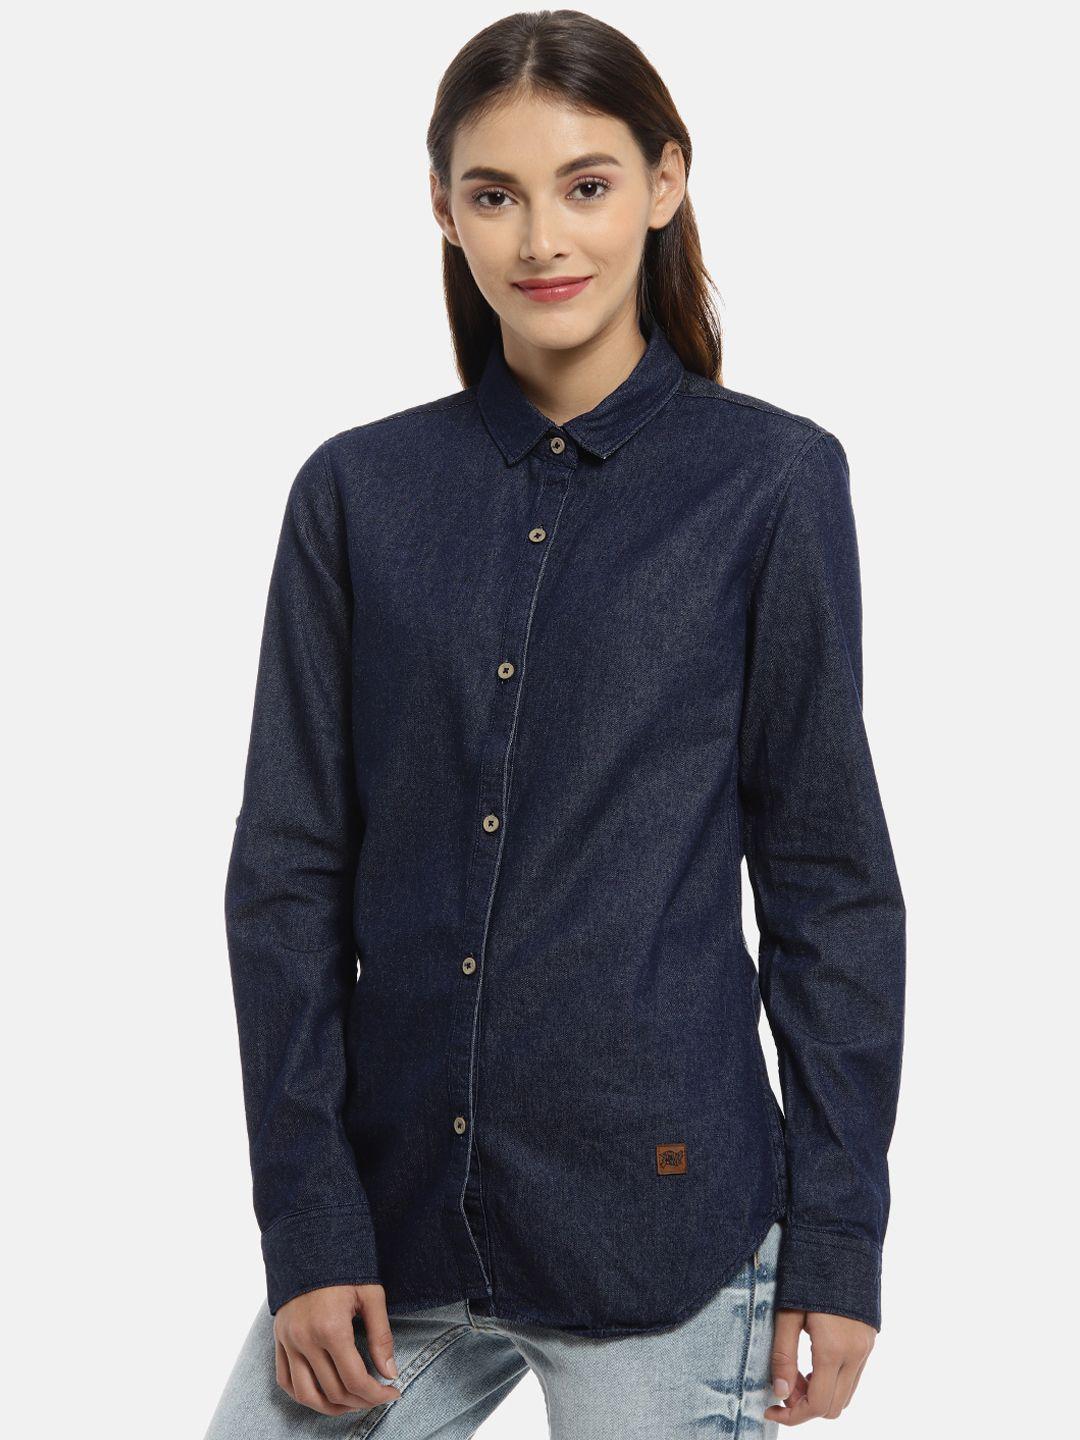 campus sutra women blue classic regular fit solid casual denim shirt